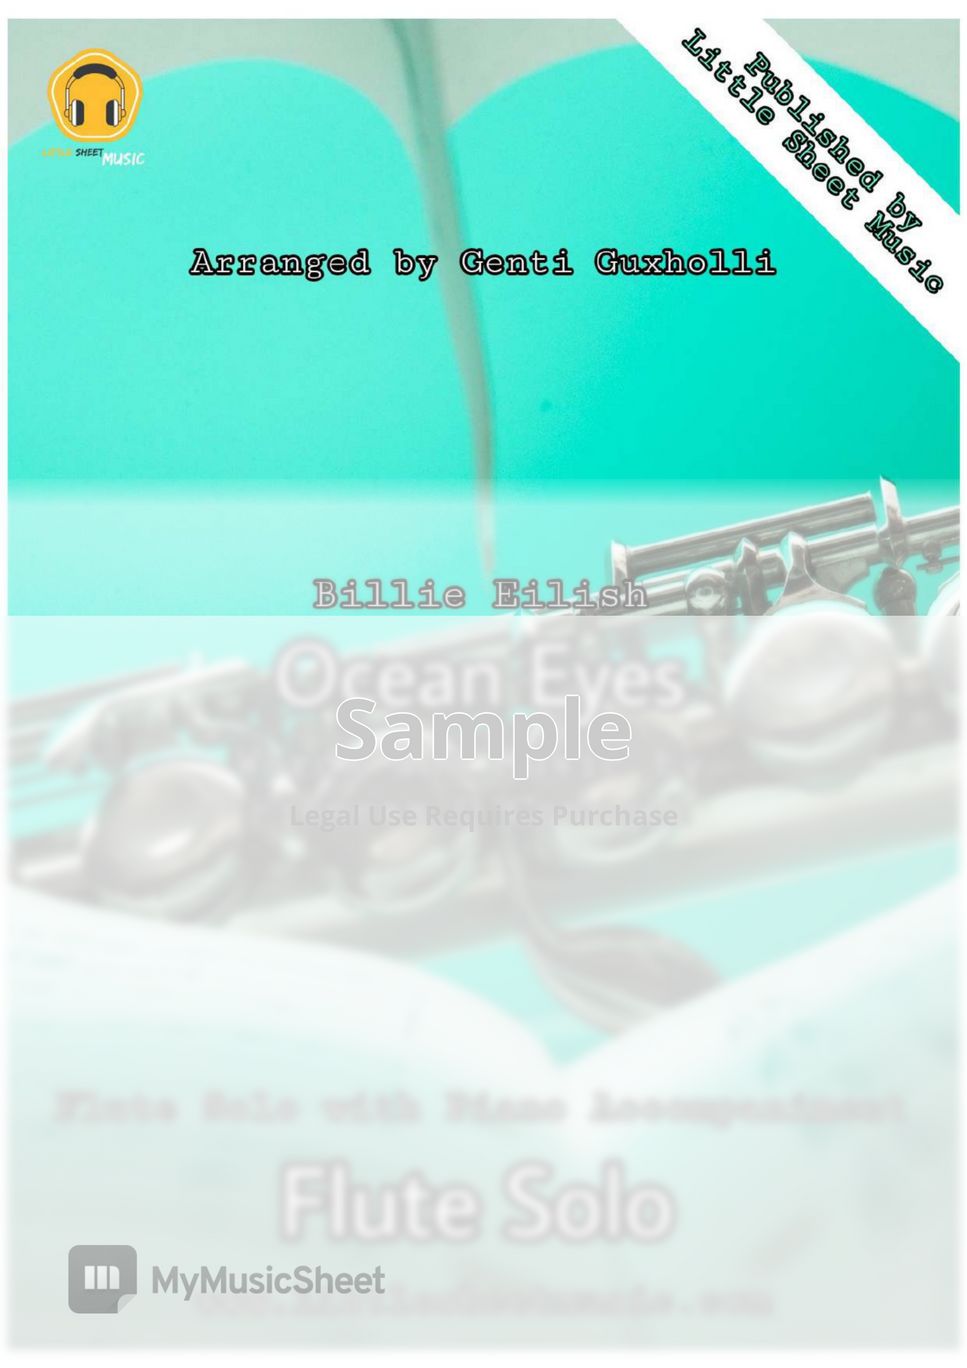 Billie Eilish - Ocean Eyes (Flute Solo with Piano Accompaniment) by Genti Guxholli